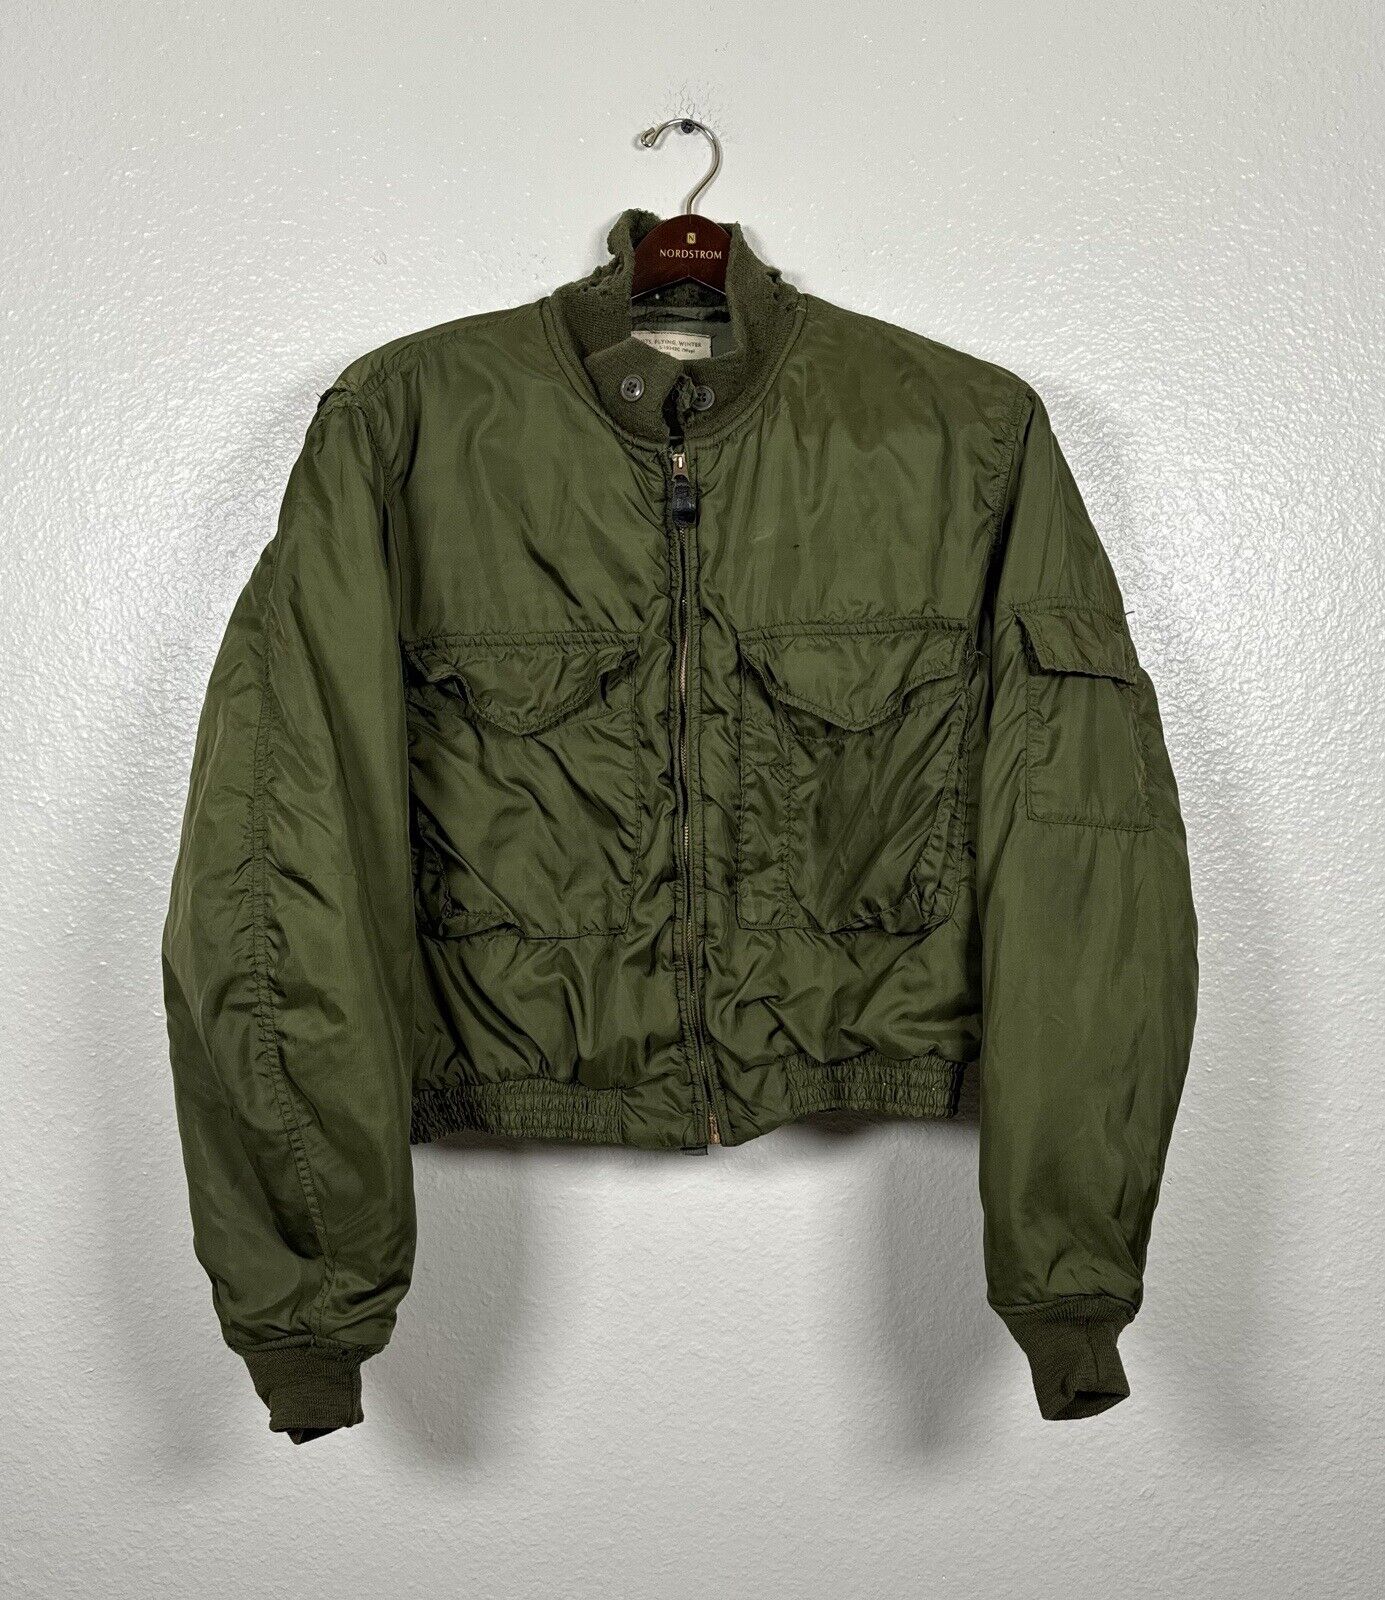 Vintage Vietnam War WEP Flying Flight Winter Suit Jacket. Size 46 L 1970